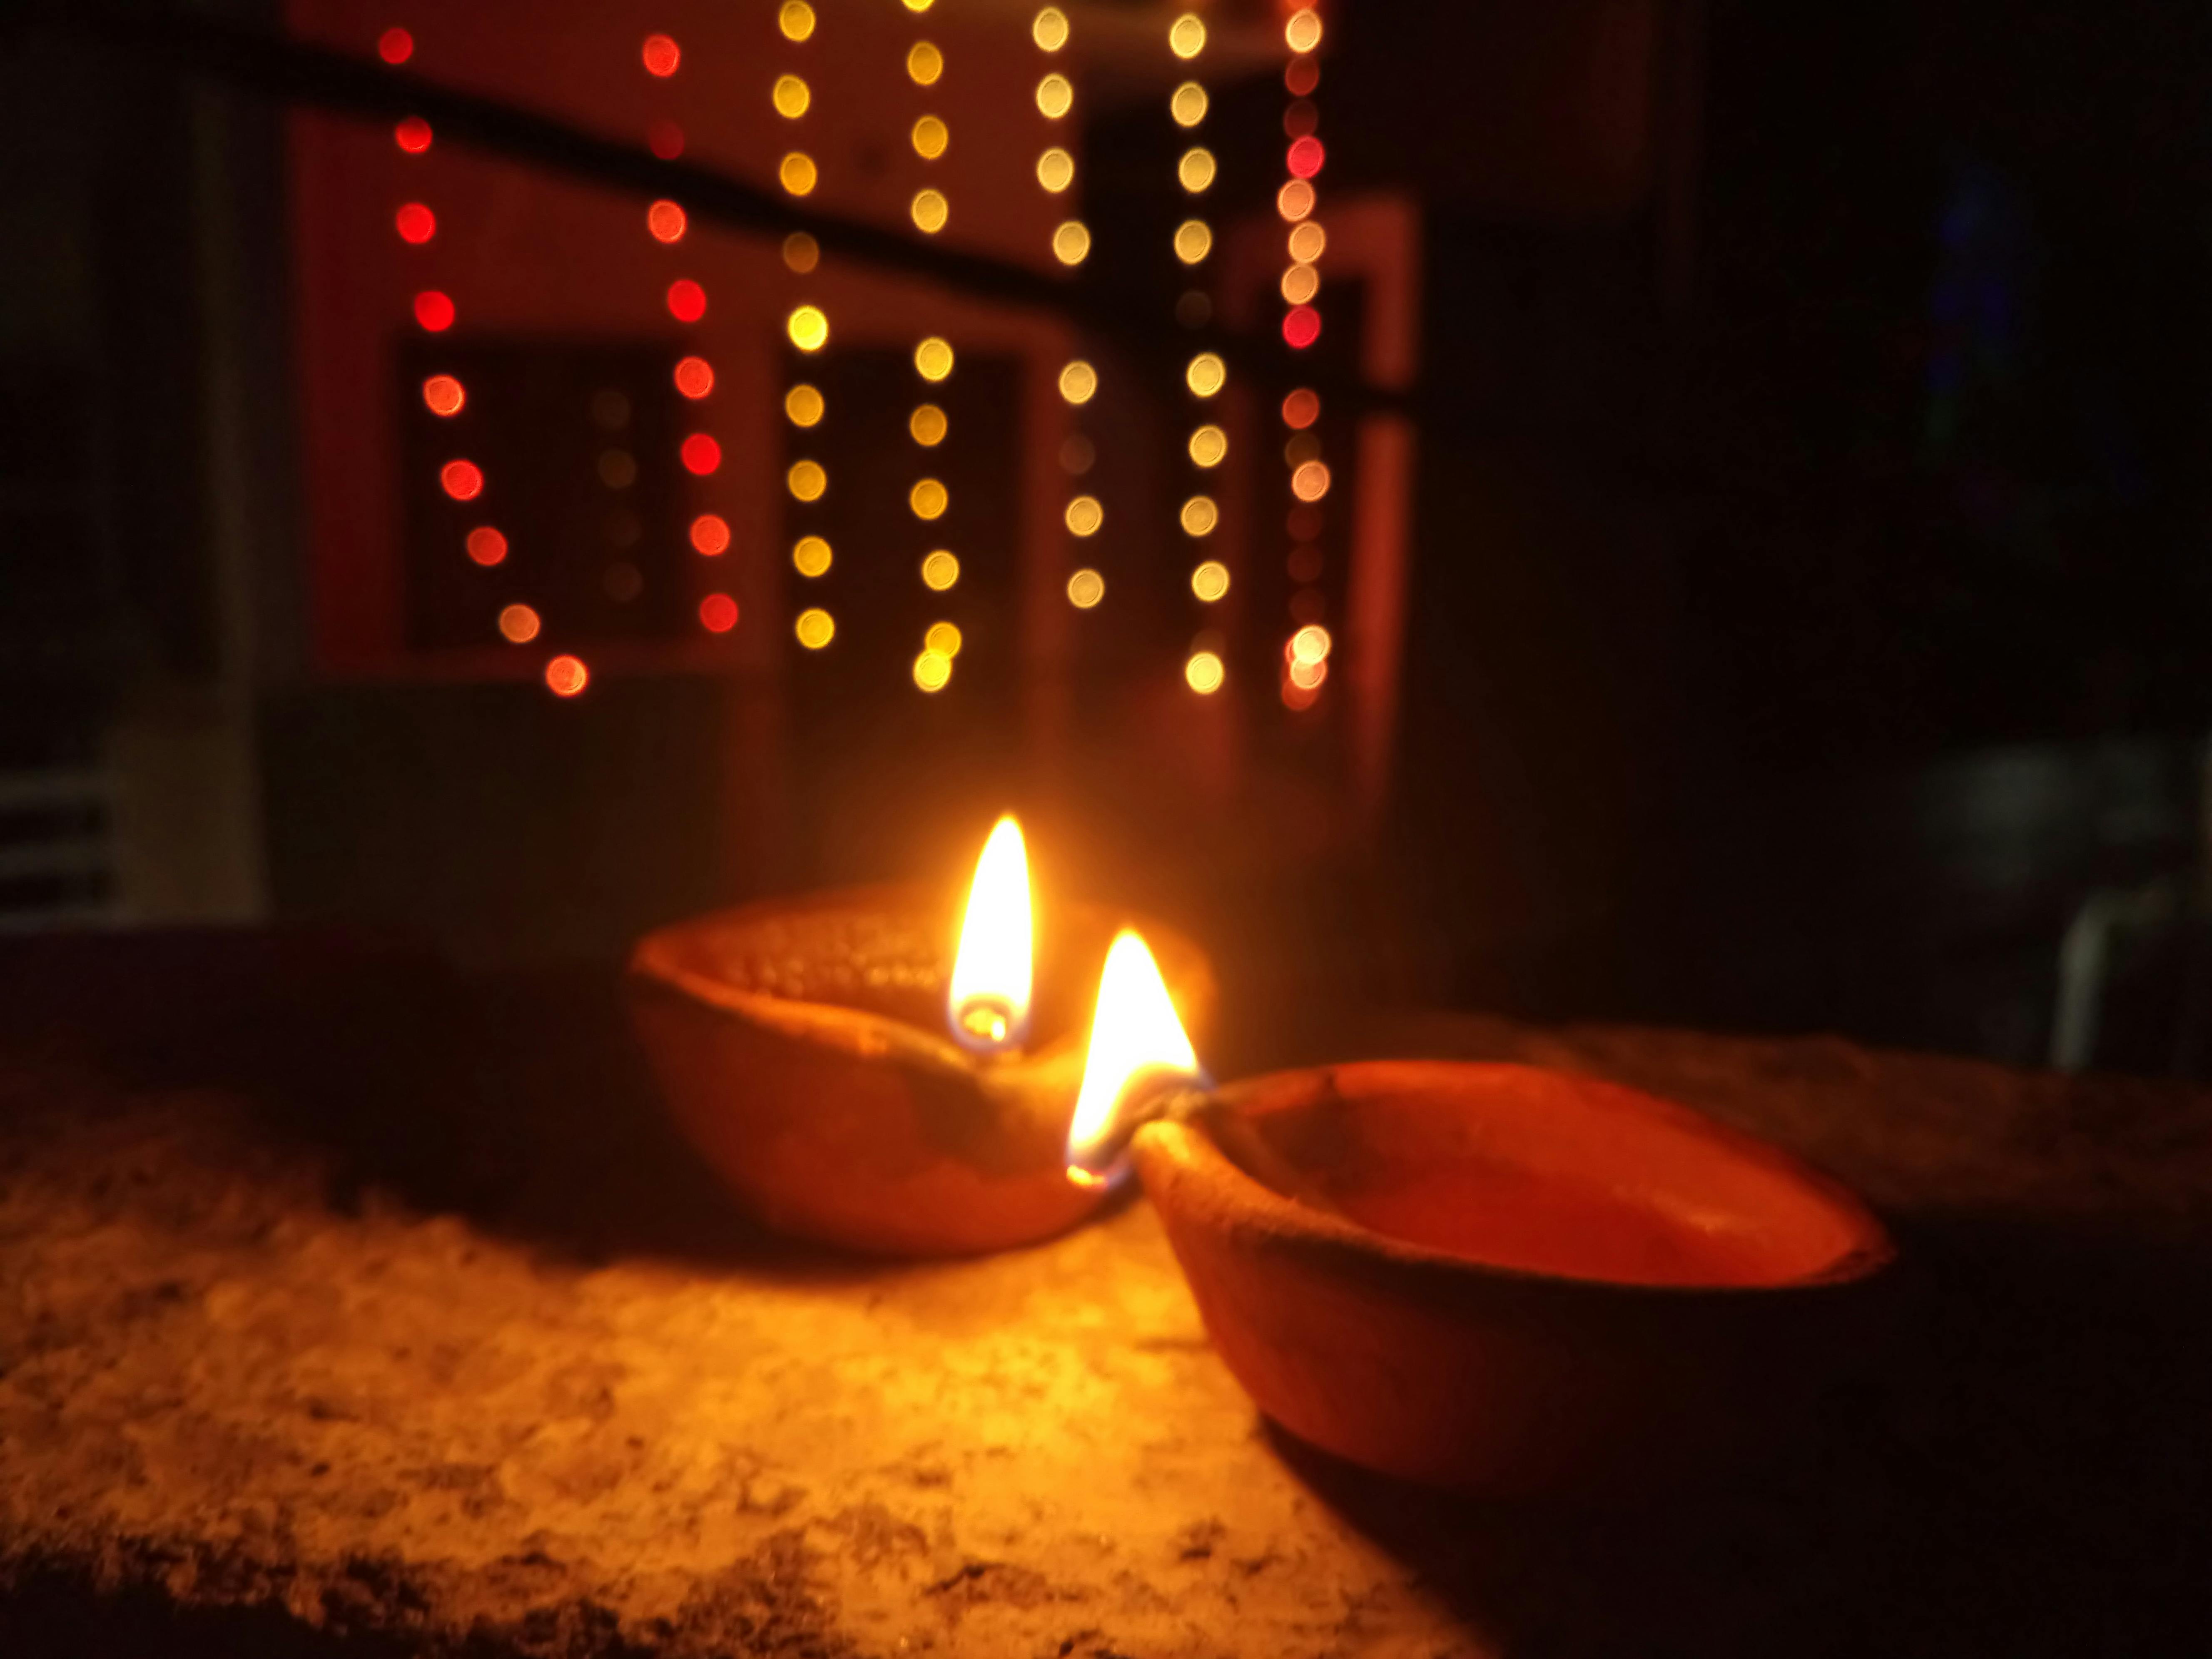 Free stock photo of Candlelights, Diwali, festive